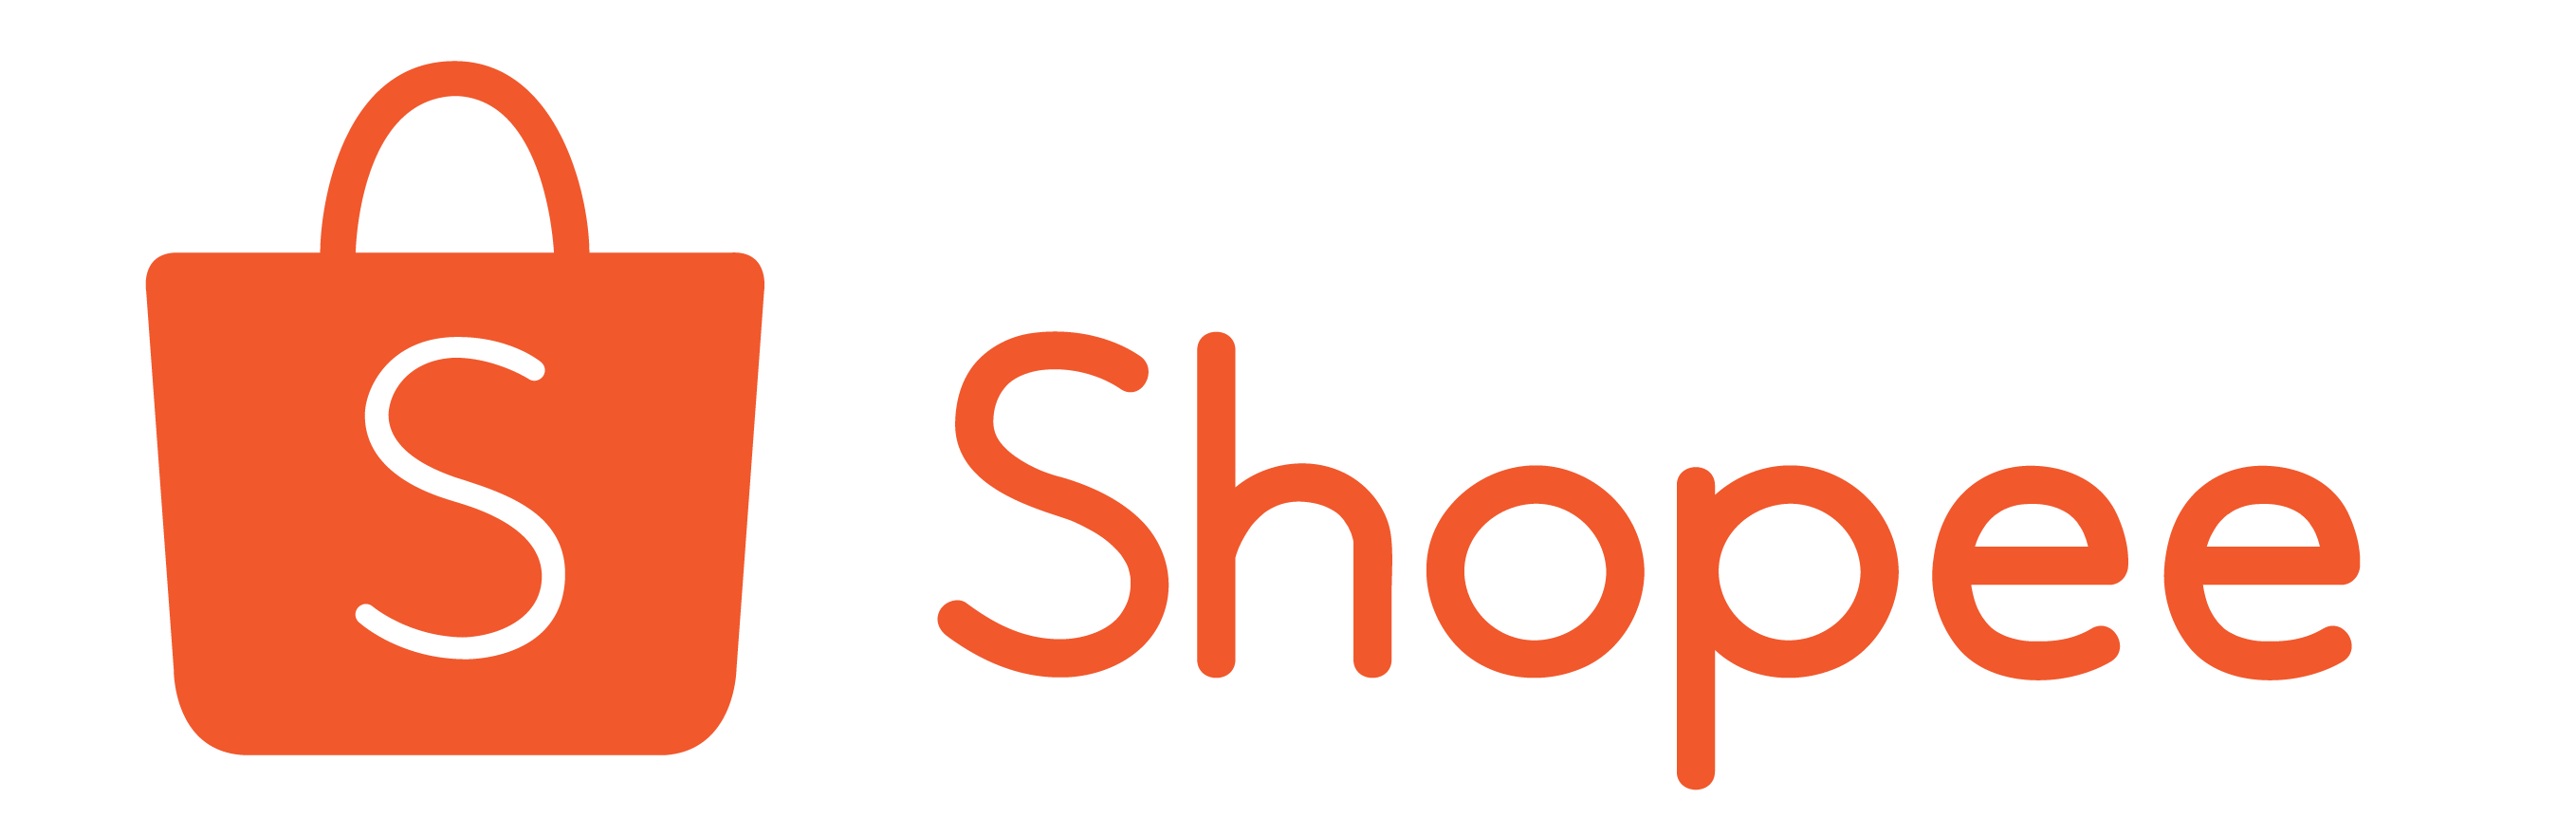 logo shopee png images tải về shopee #40477